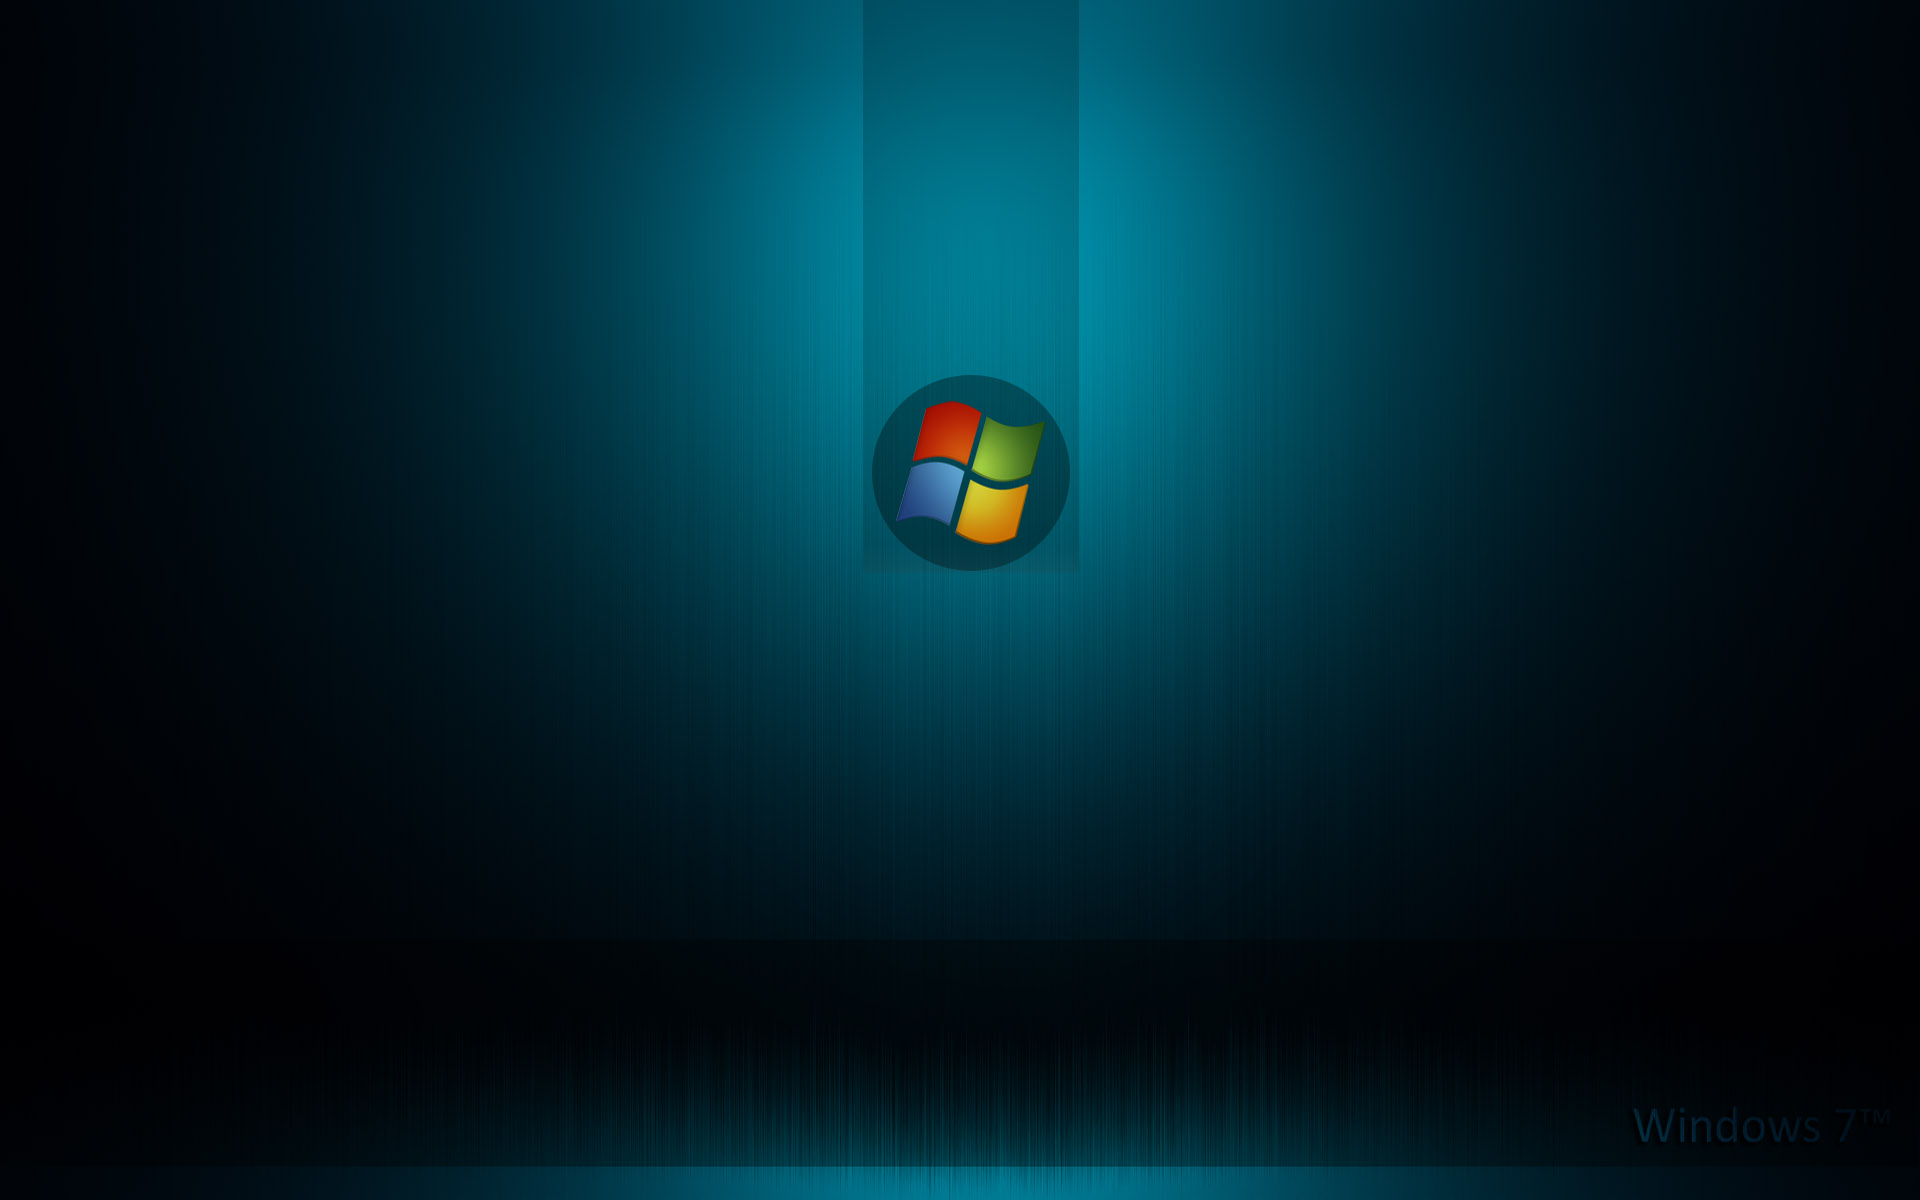 Sinking-Windows-7-Wallpaper-Computer-Picture-Desktop-Image.jpg